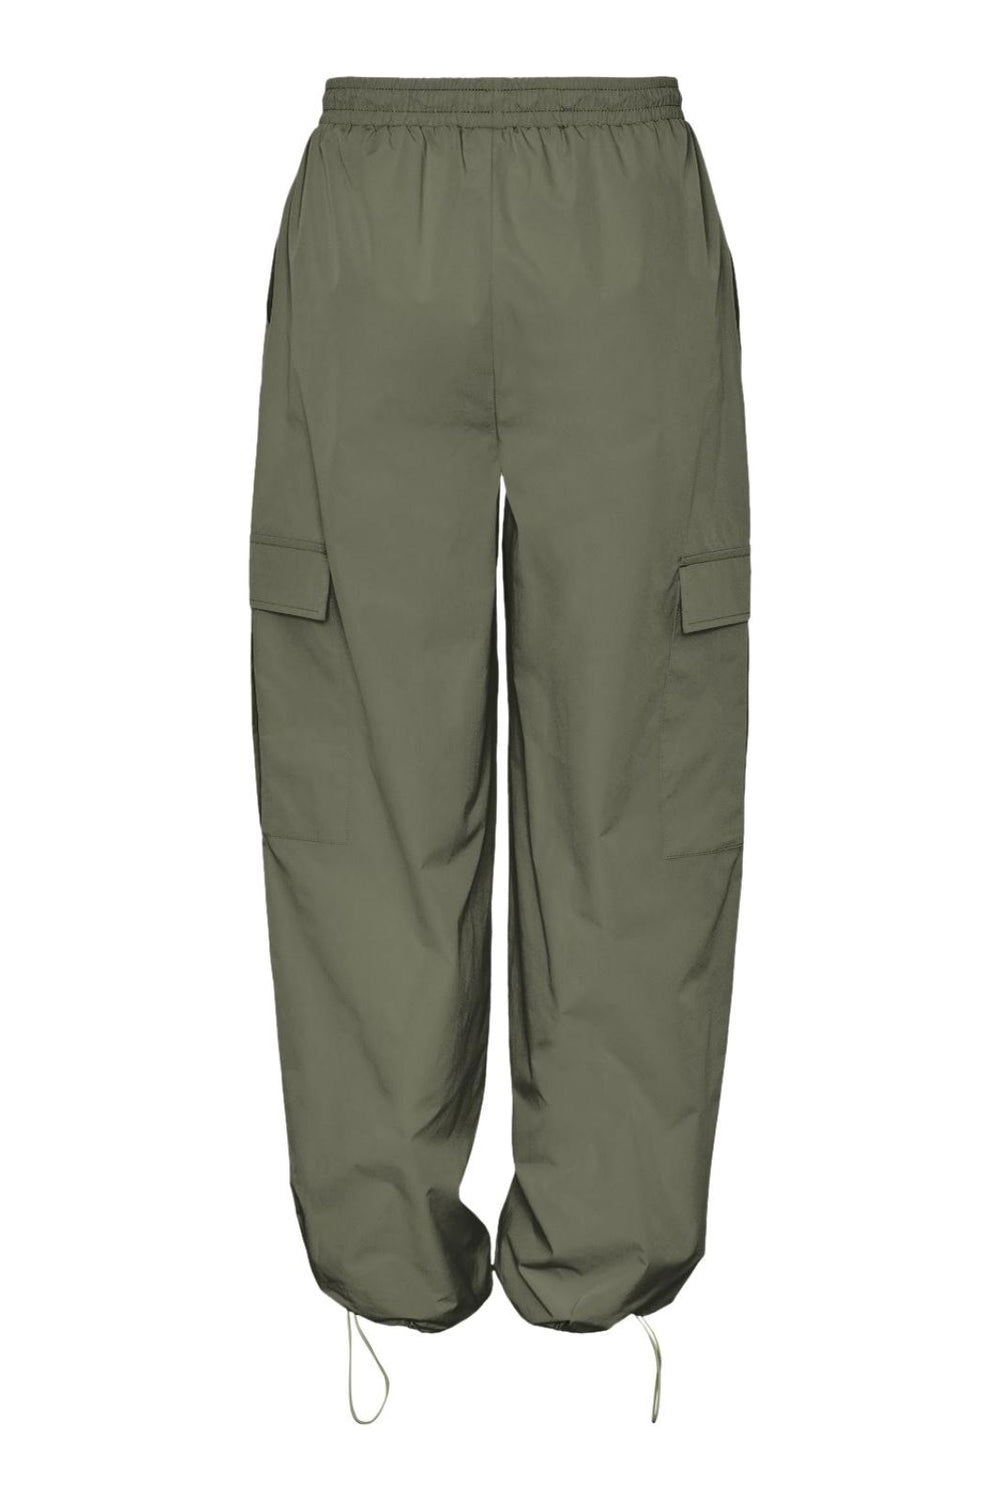 Pieces - Pcdre Cargo Pants - Deep Lichen Green Bukser 